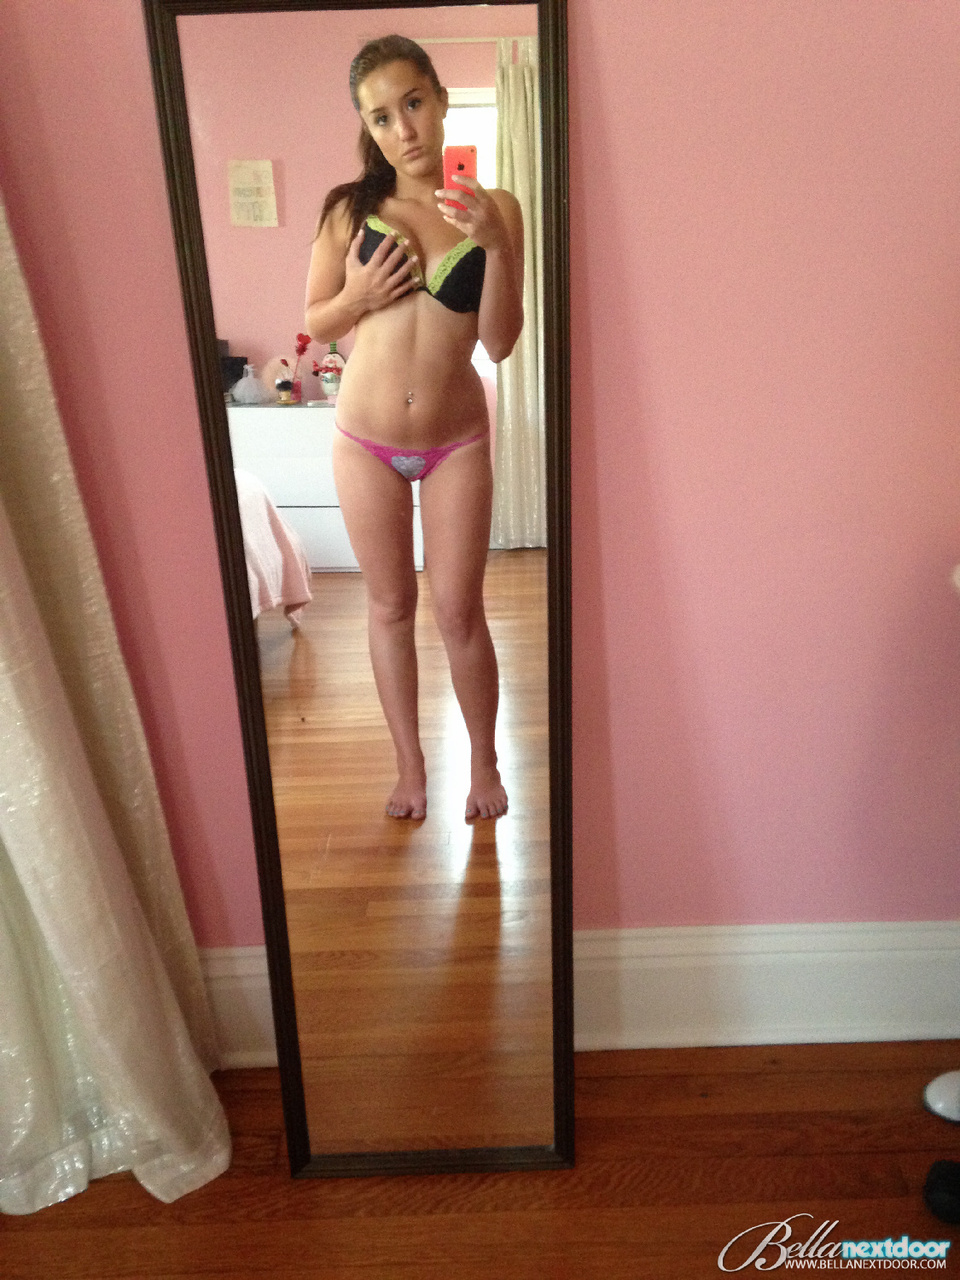 Solo girl Ariana Cruz takes nude selfies in a full-length mirror photo